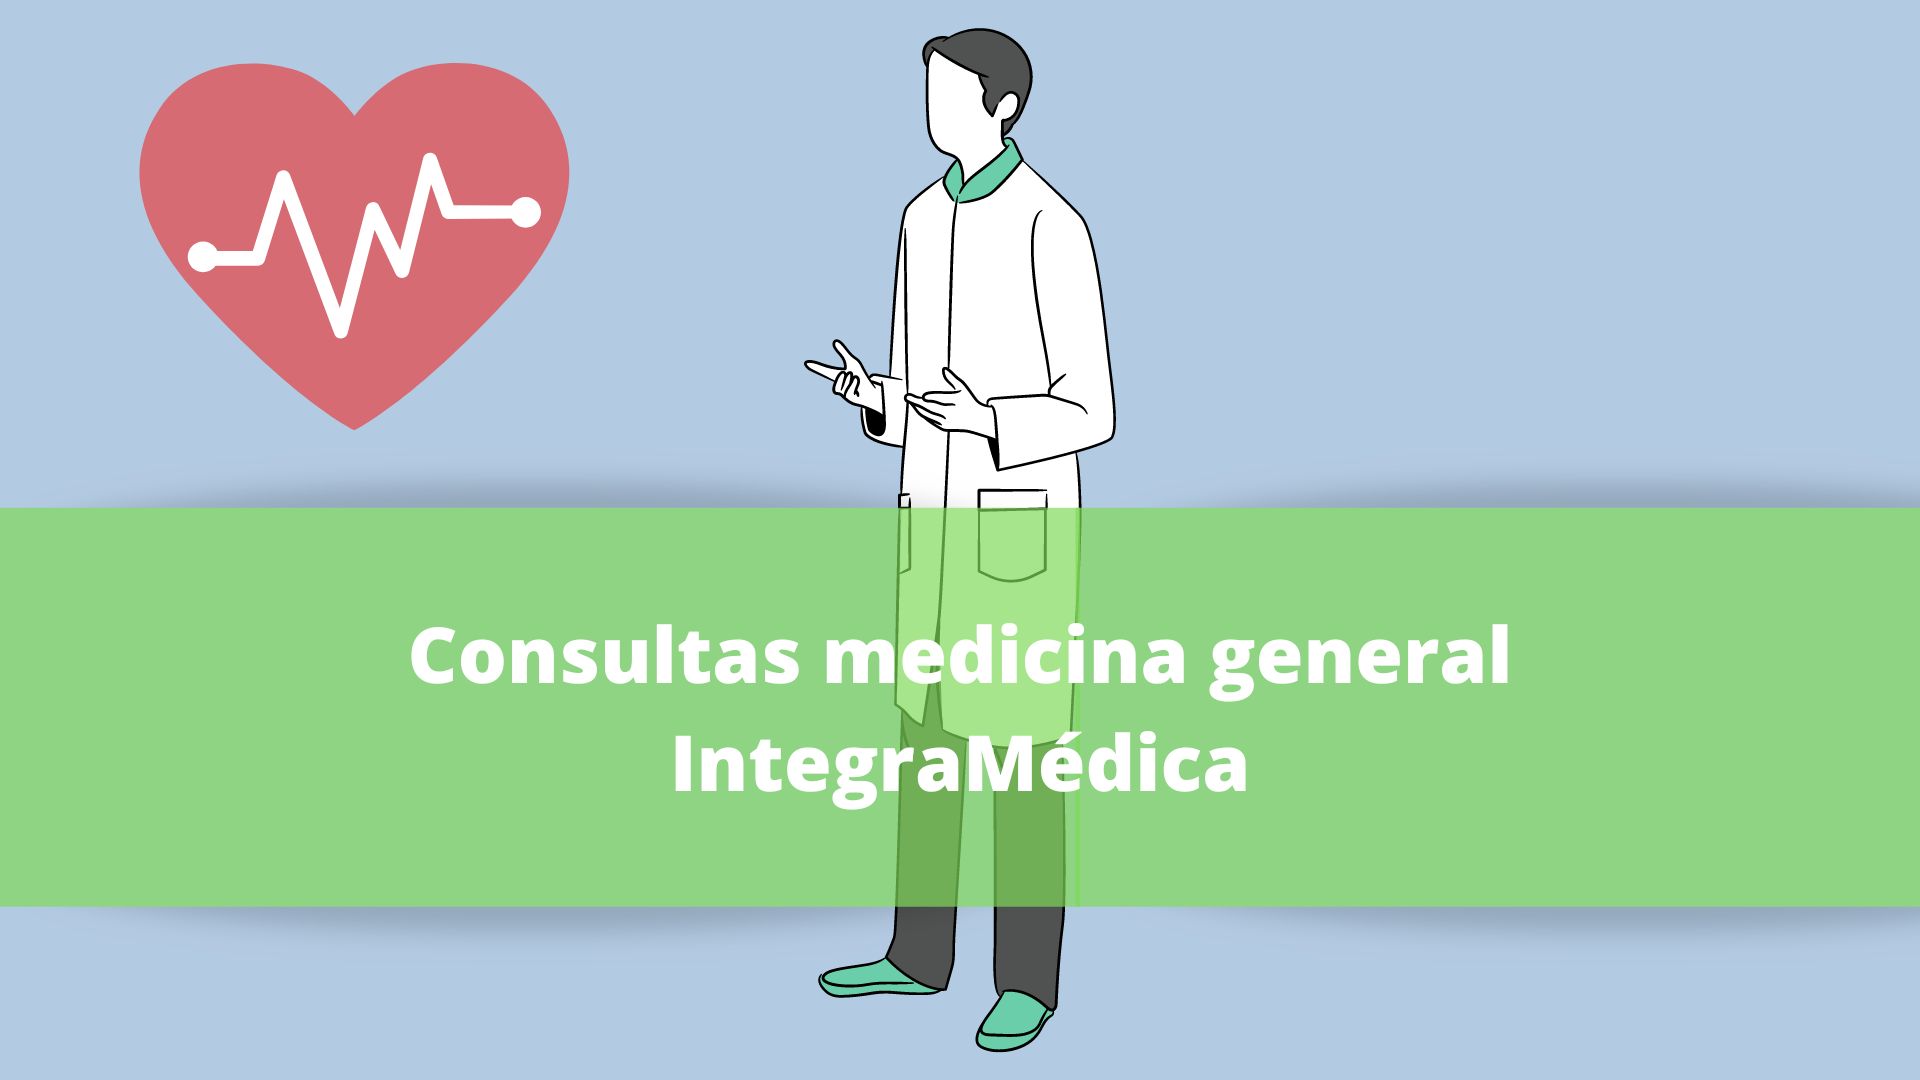 Consultas medicina general IntegraMédica